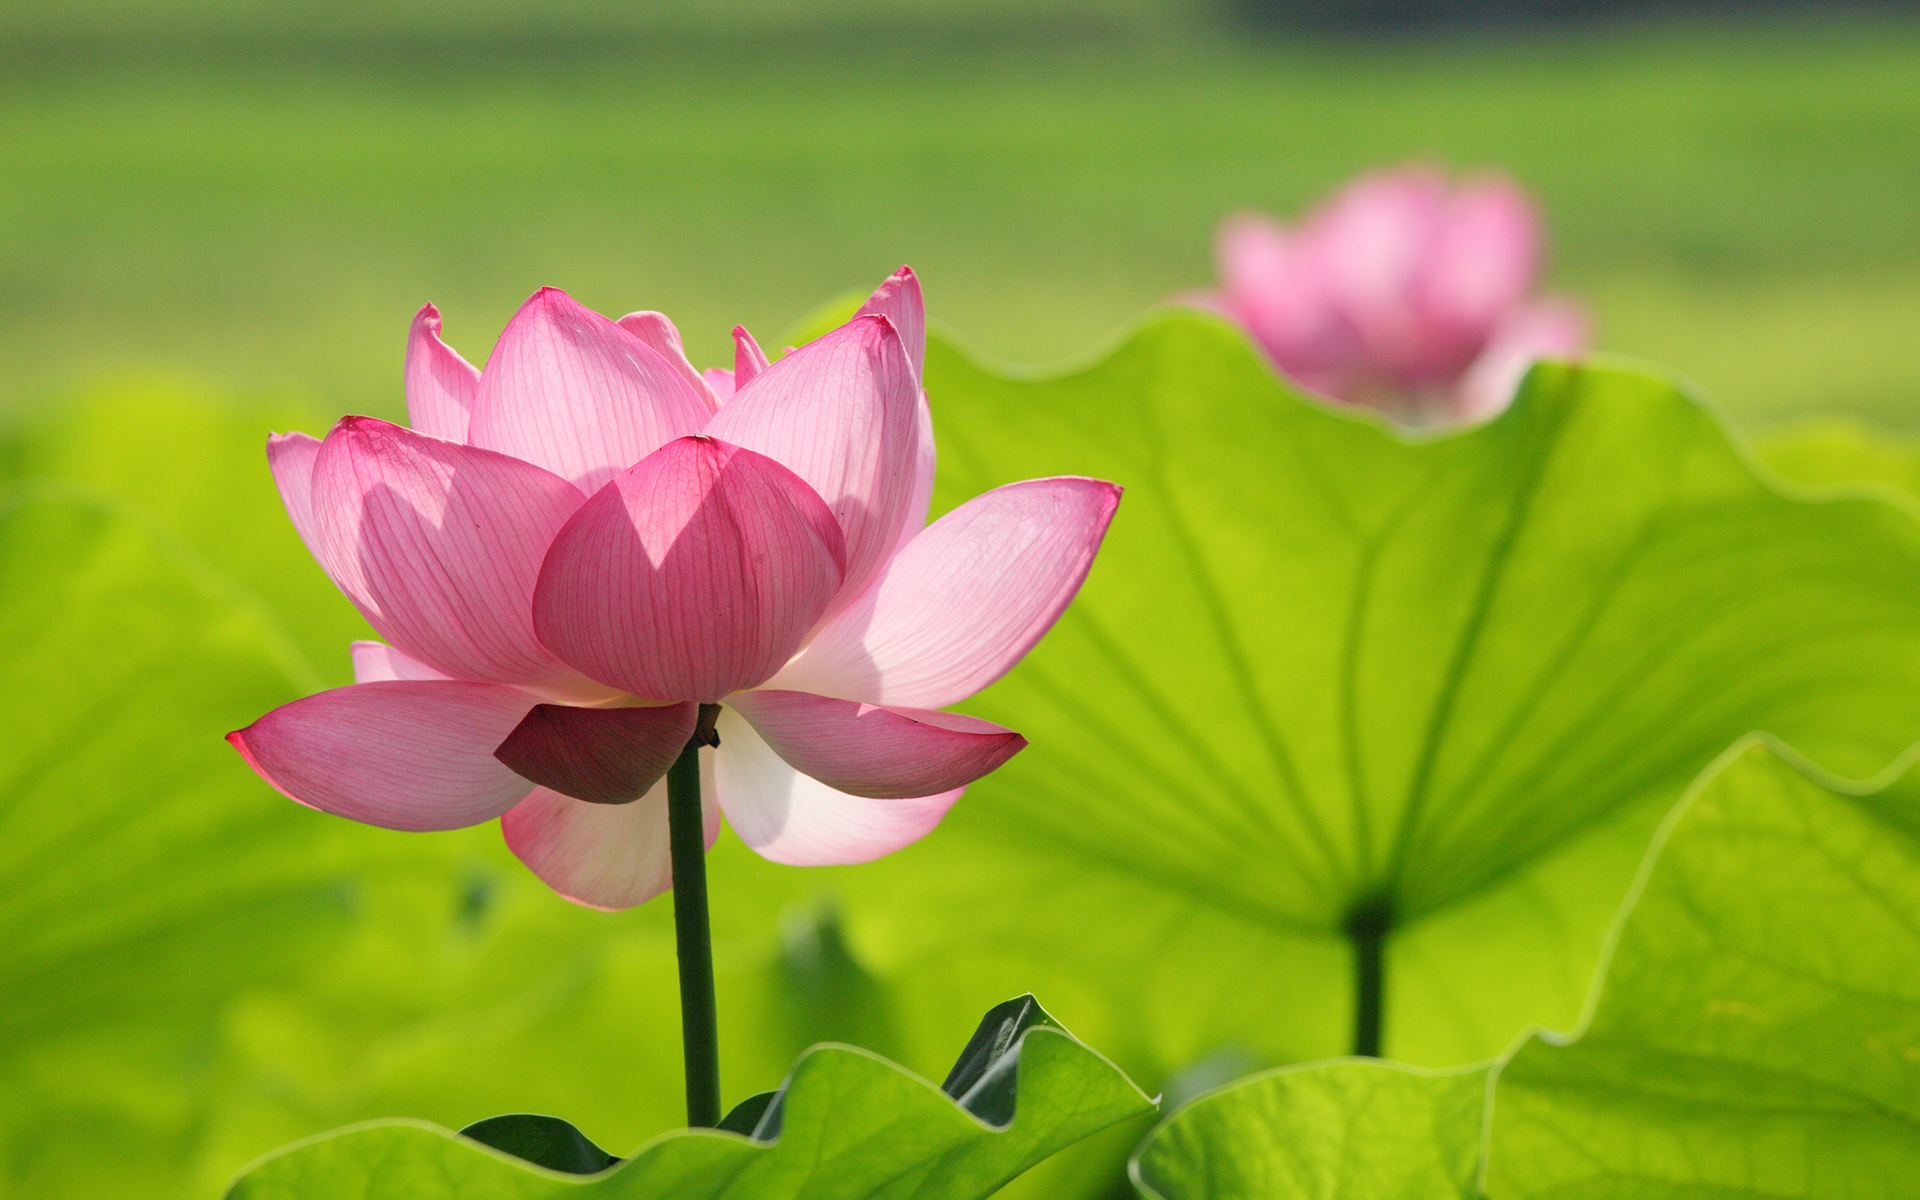 Lotus Flower Wallpaper Pictures Image